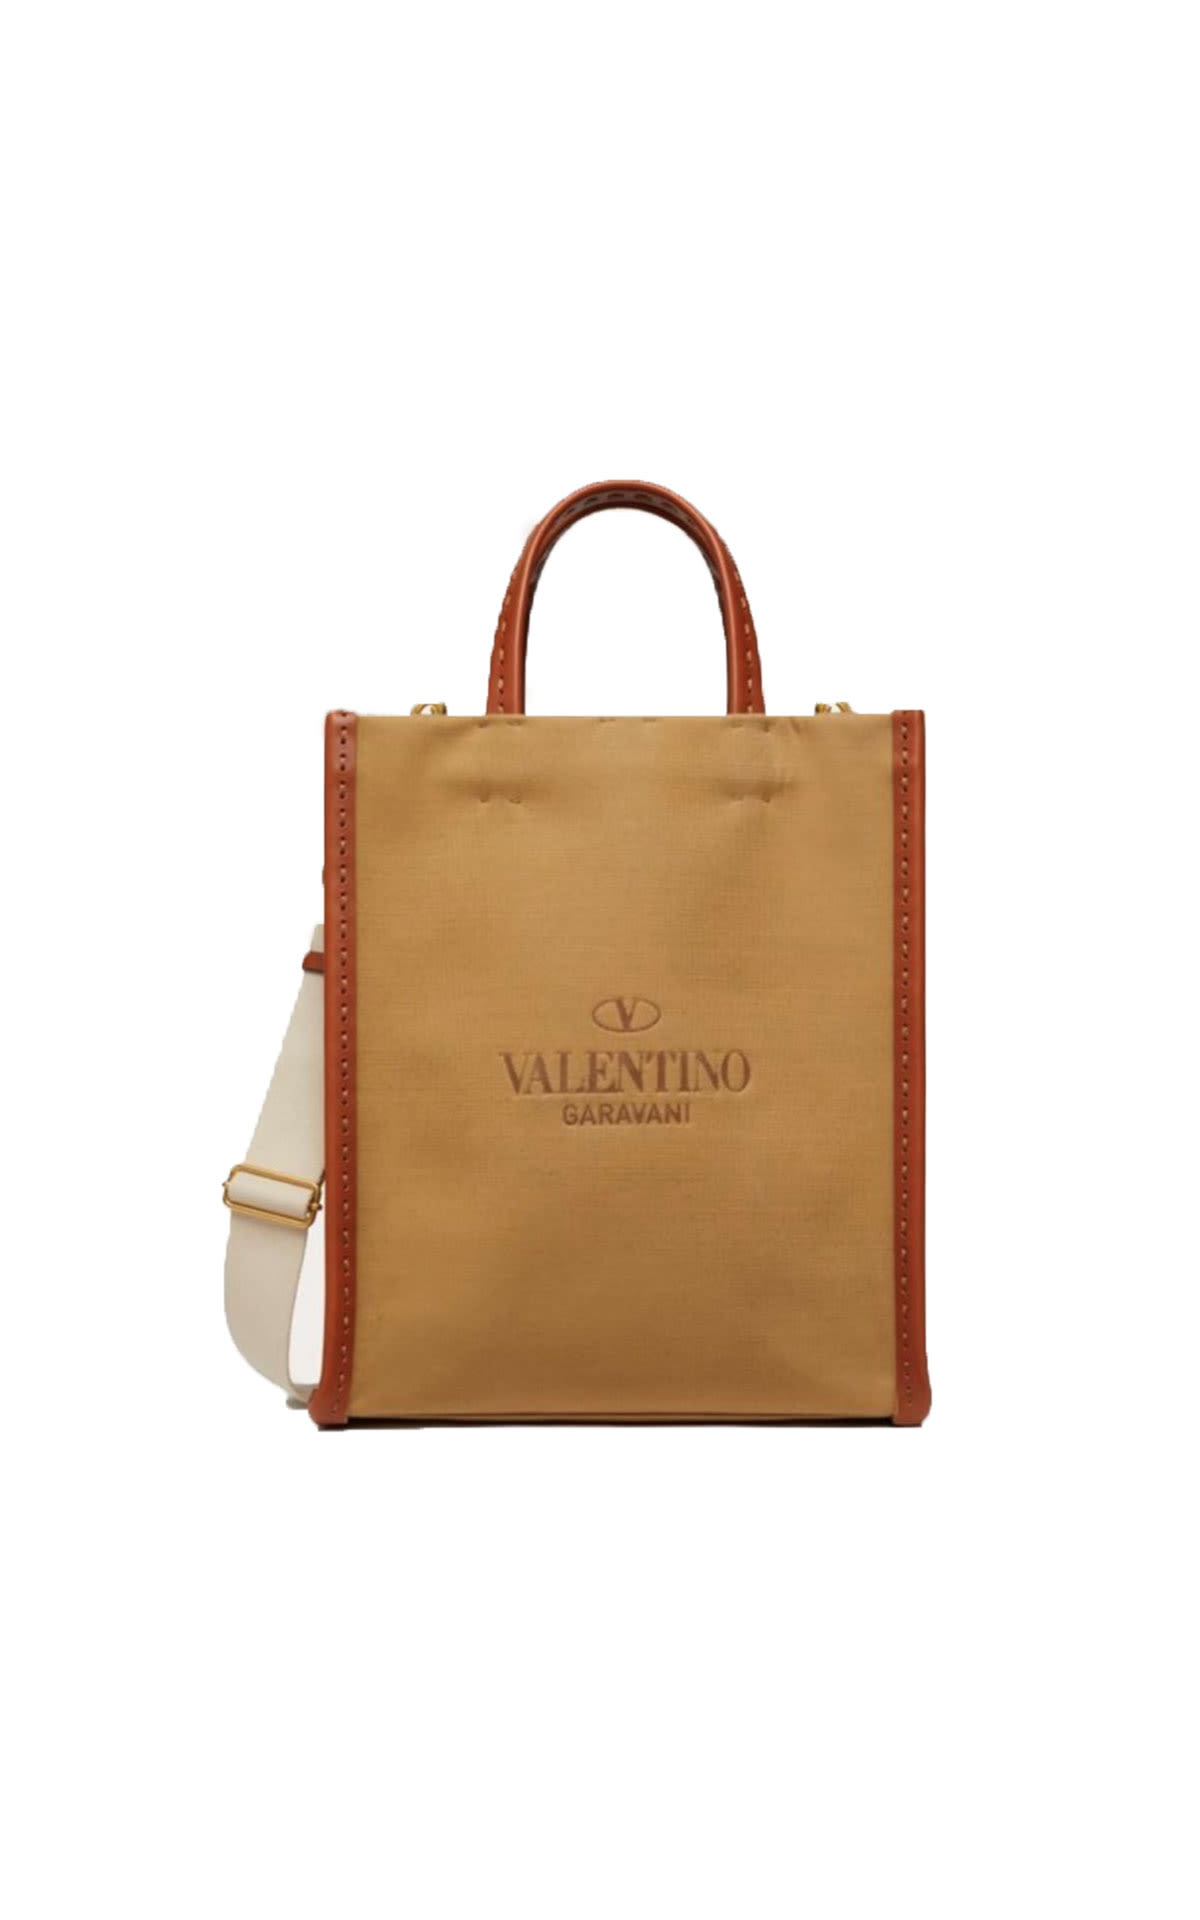 Valentino Garavani Identity canvas tote bag from Bicester Village